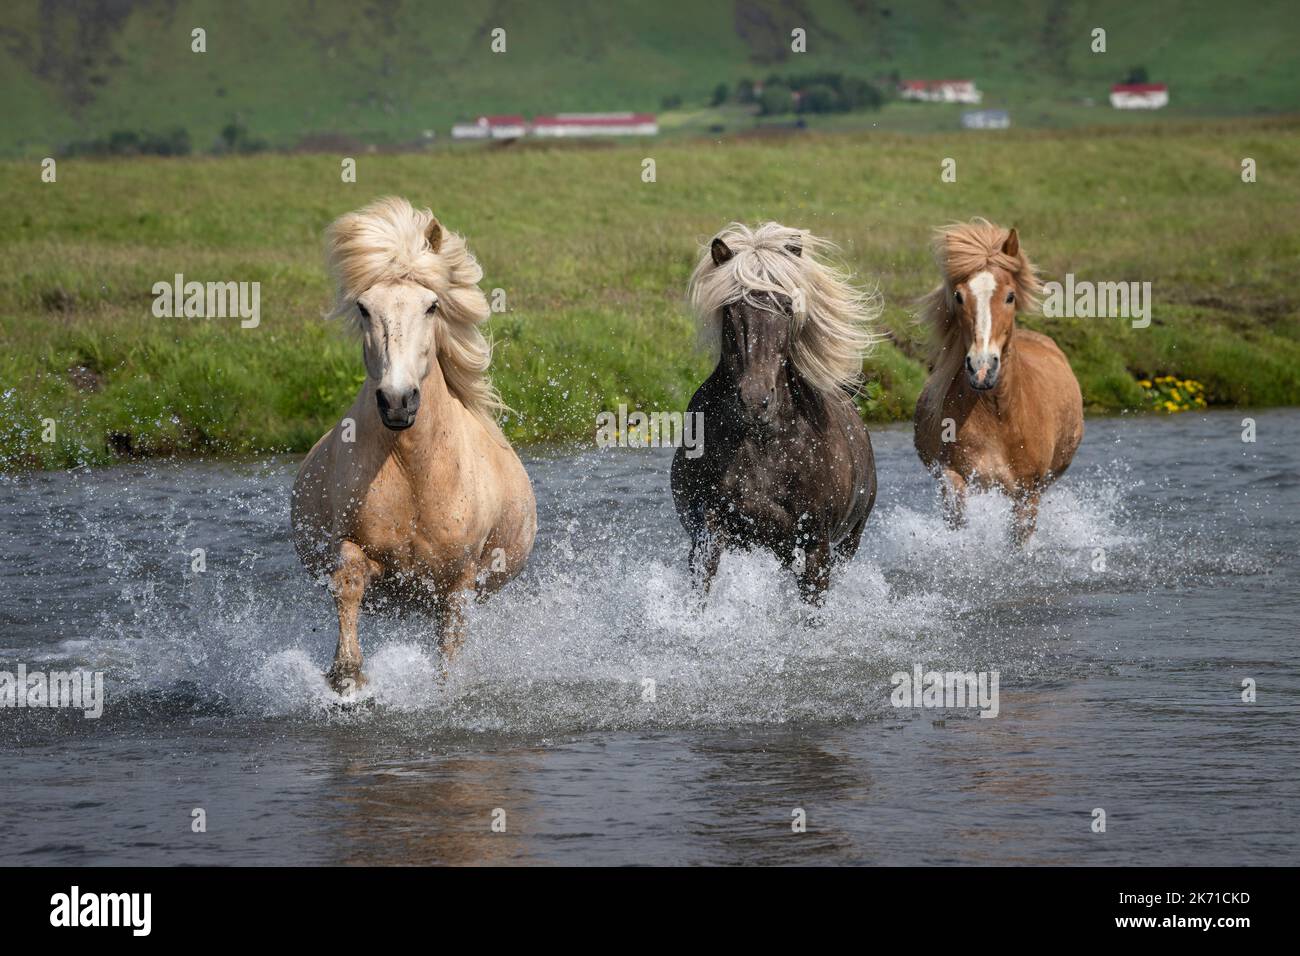 Three Icelandic horses running through a river Stock Photo